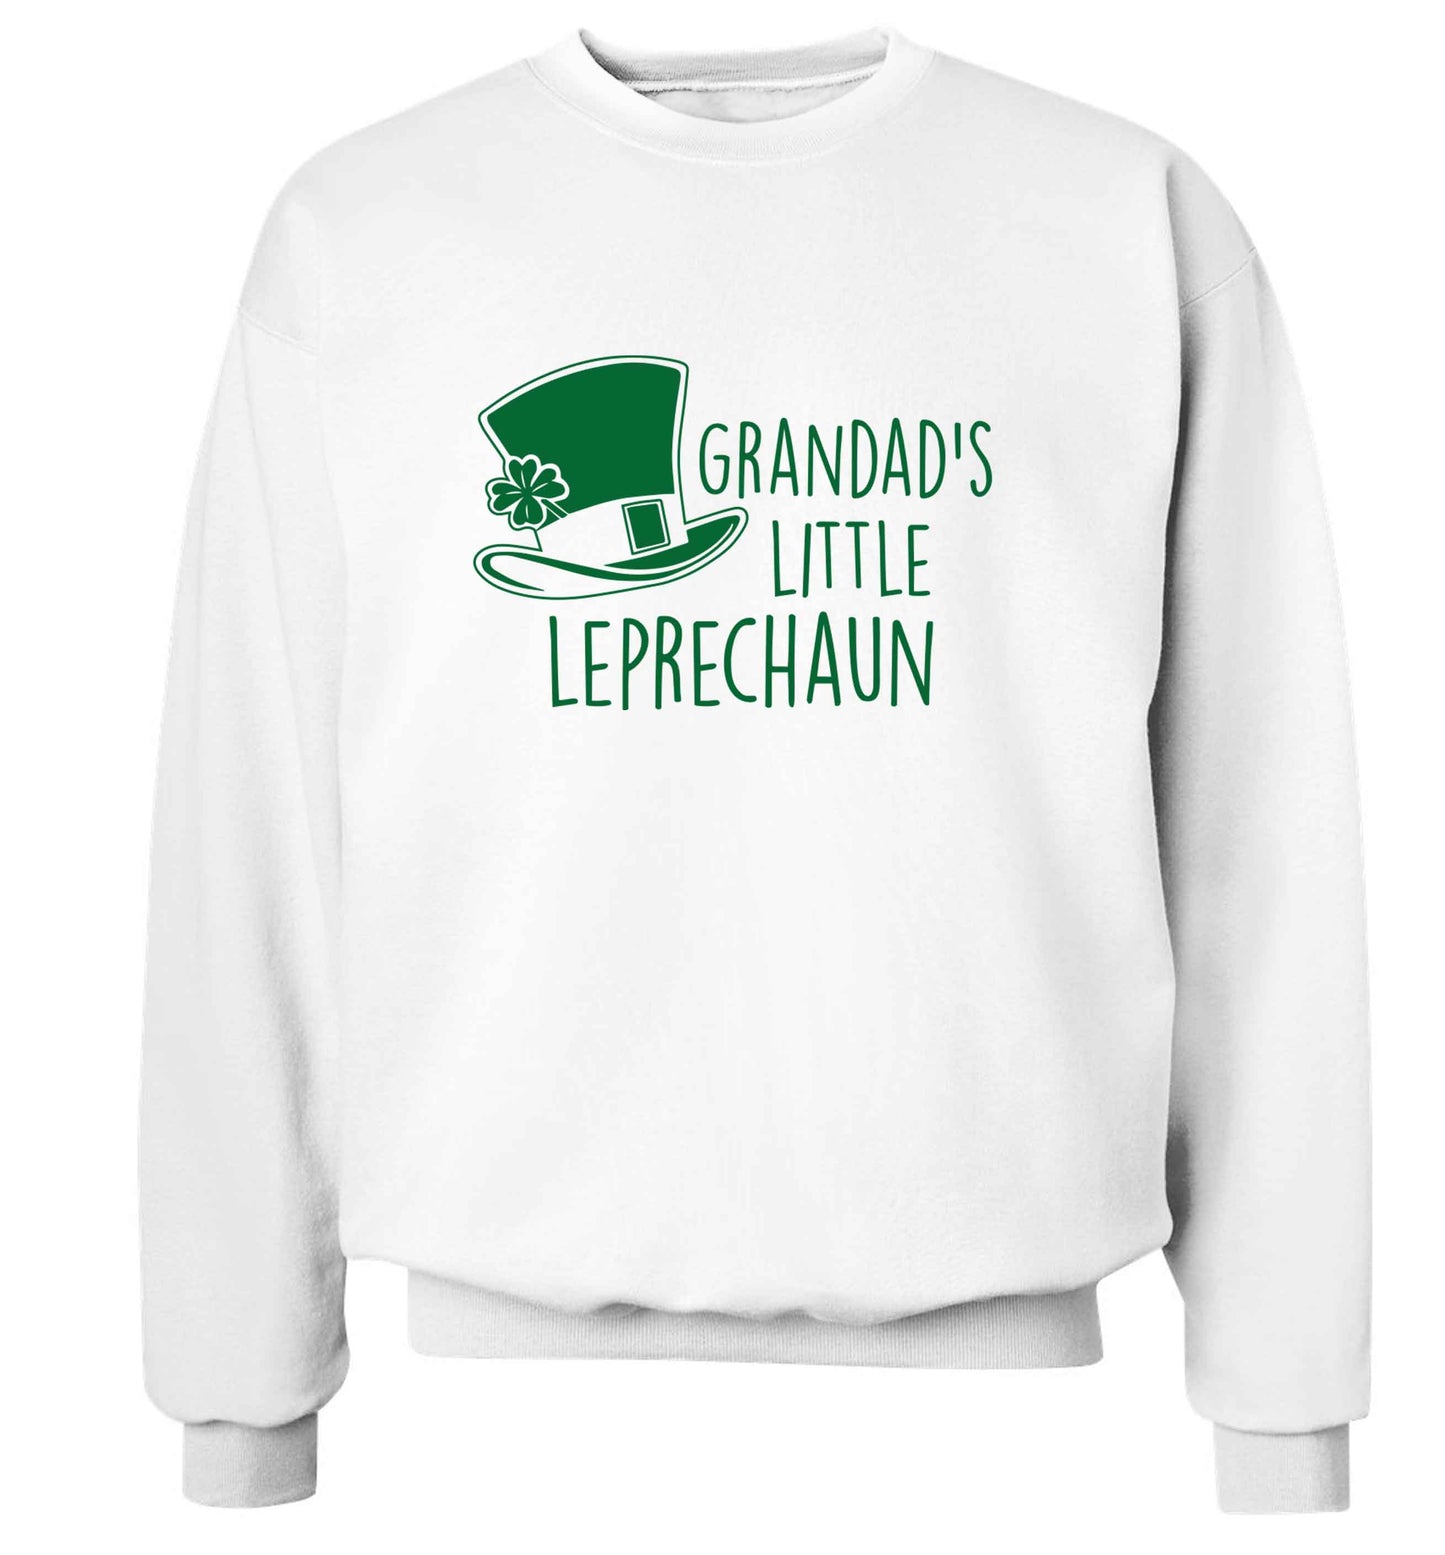 Grandad's little leprechaun adult's unisex white sweater 2XL